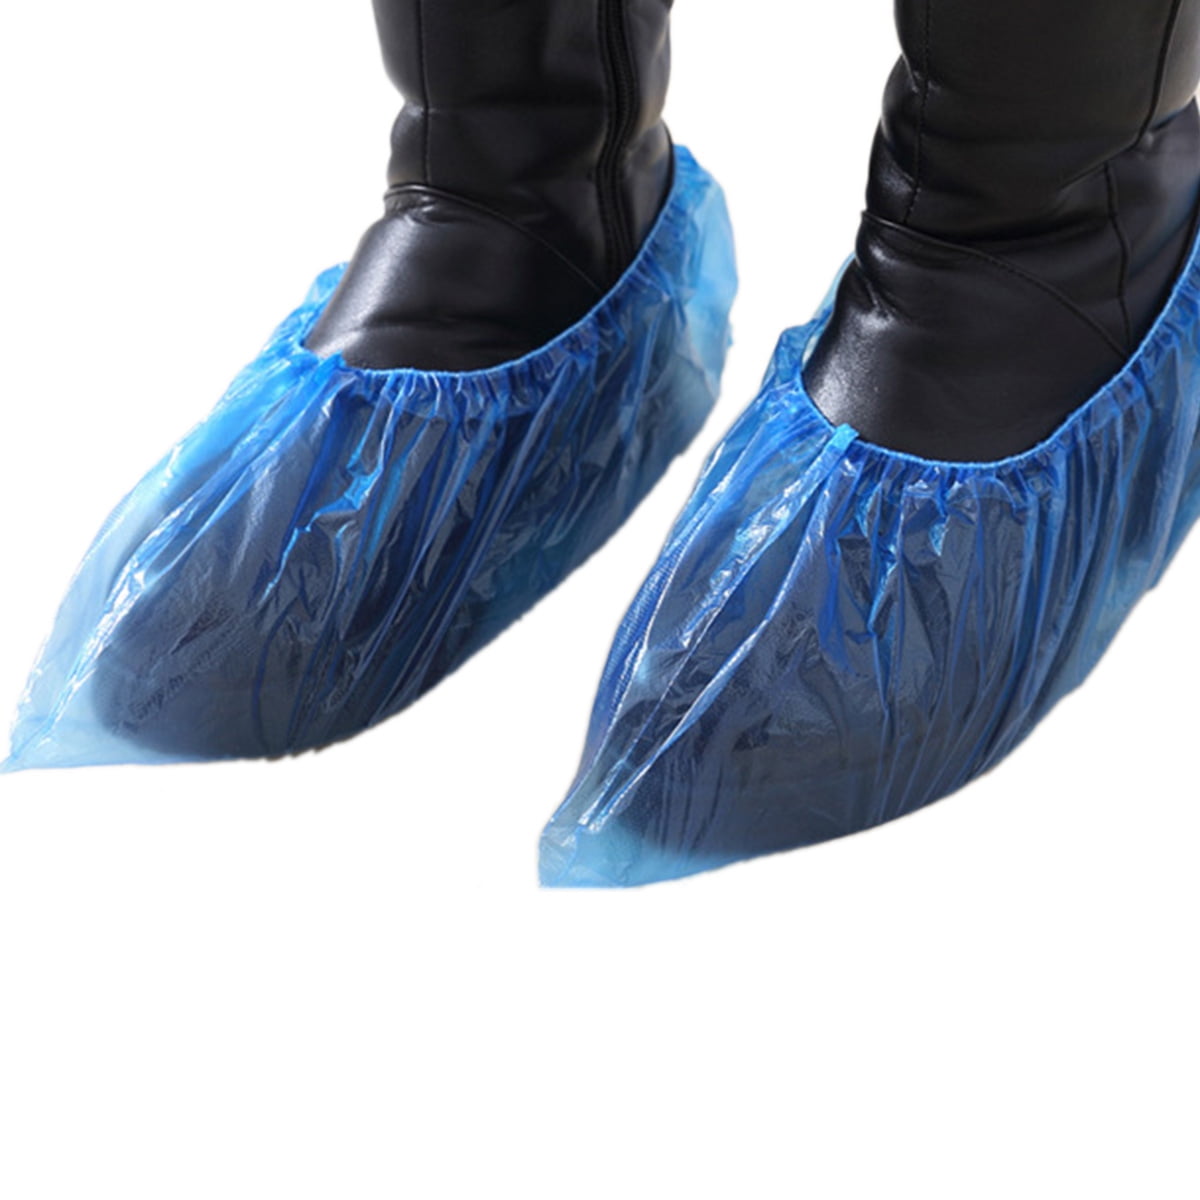 plastic shoe covers walmart